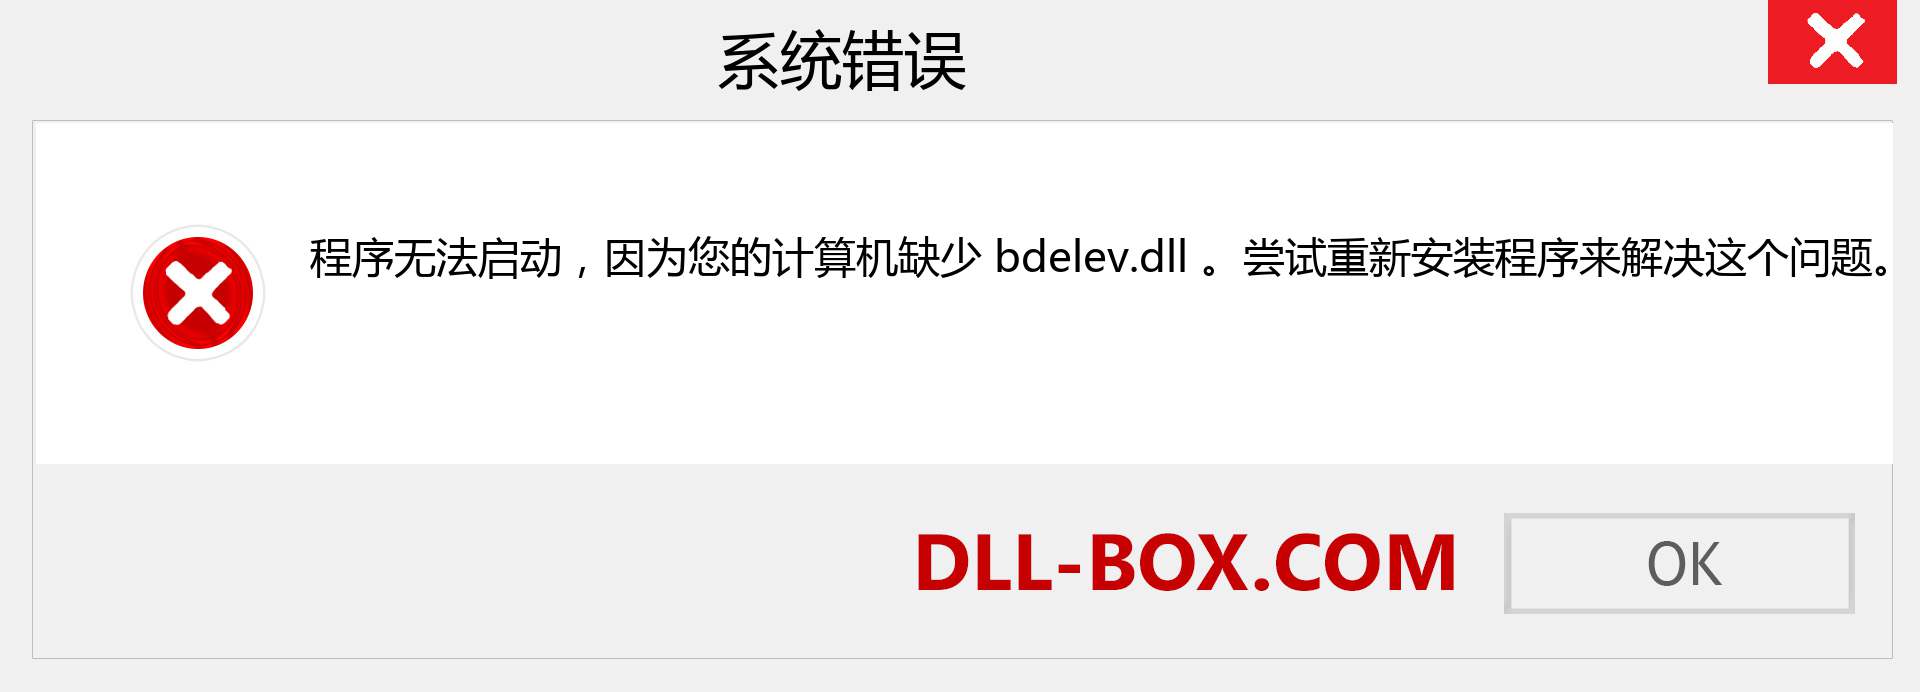 bdelev.dll 文件丢失？。 适用于 Windows 7、8、10 的下载 - 修复 Windows、照片、图像上的 bdelev dll 丢失错误